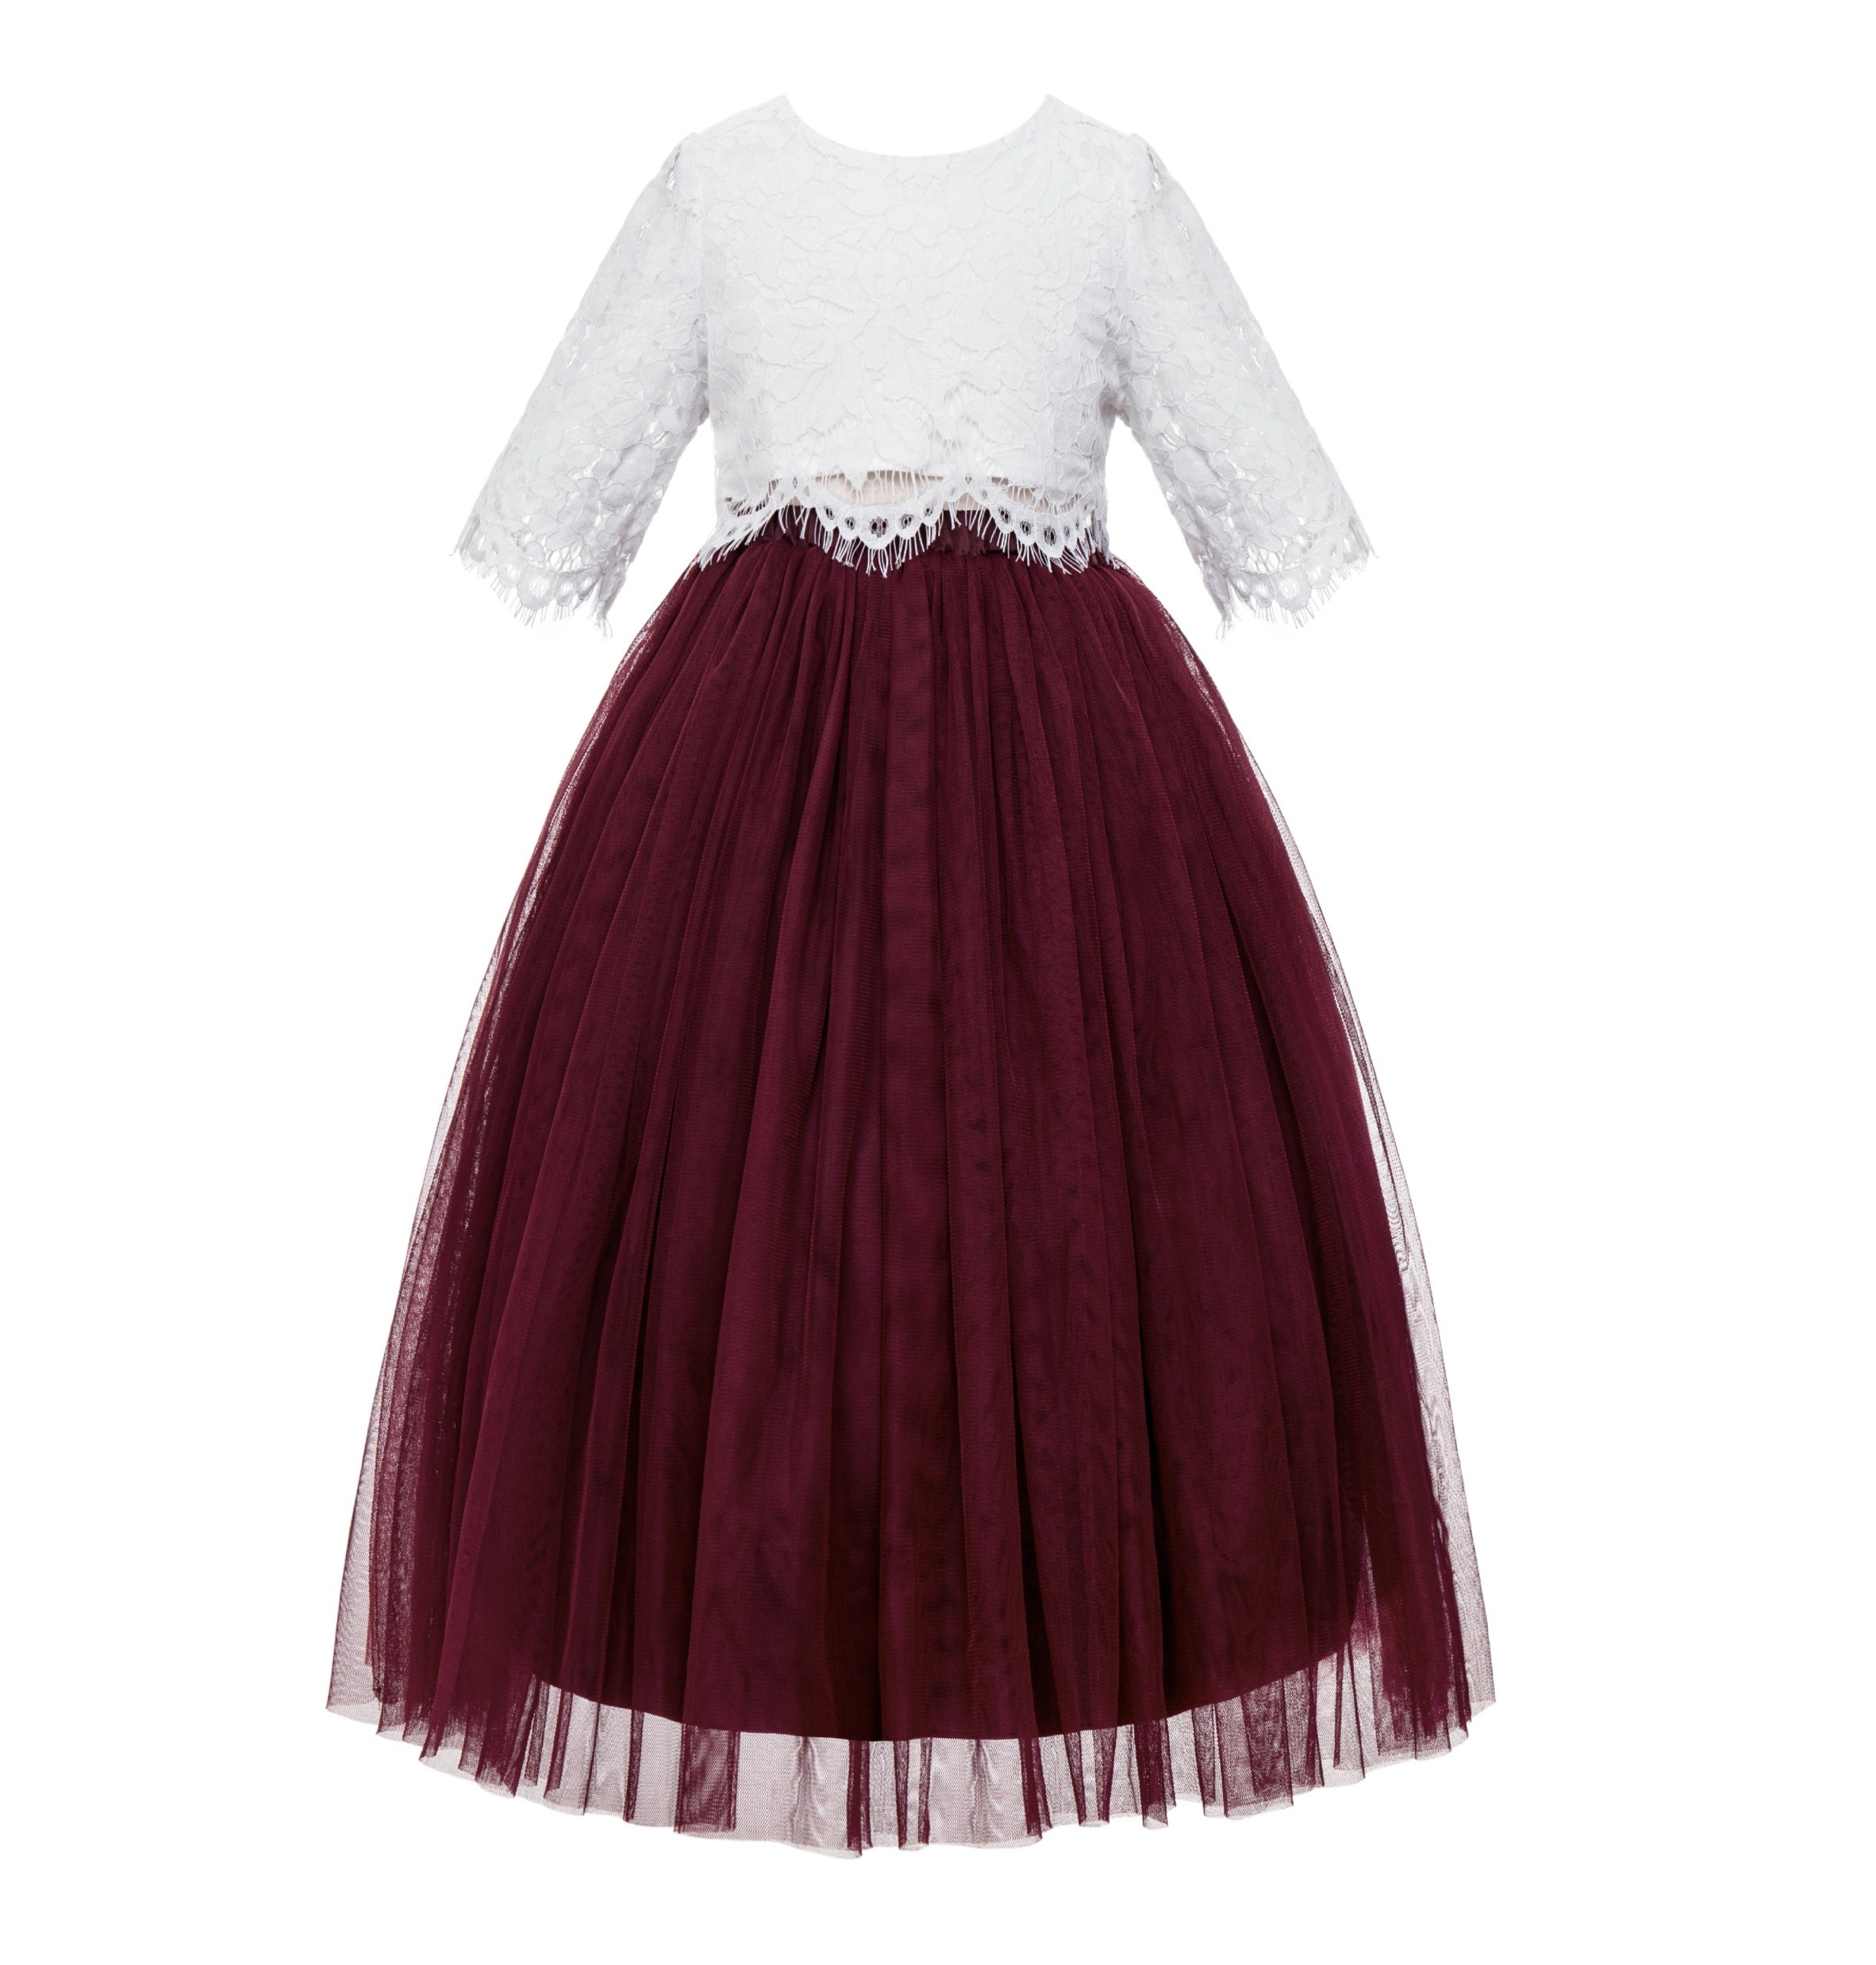 Burgundy Eyelash Lace Flower Girl Dress A-Line Tulle Dress LG5